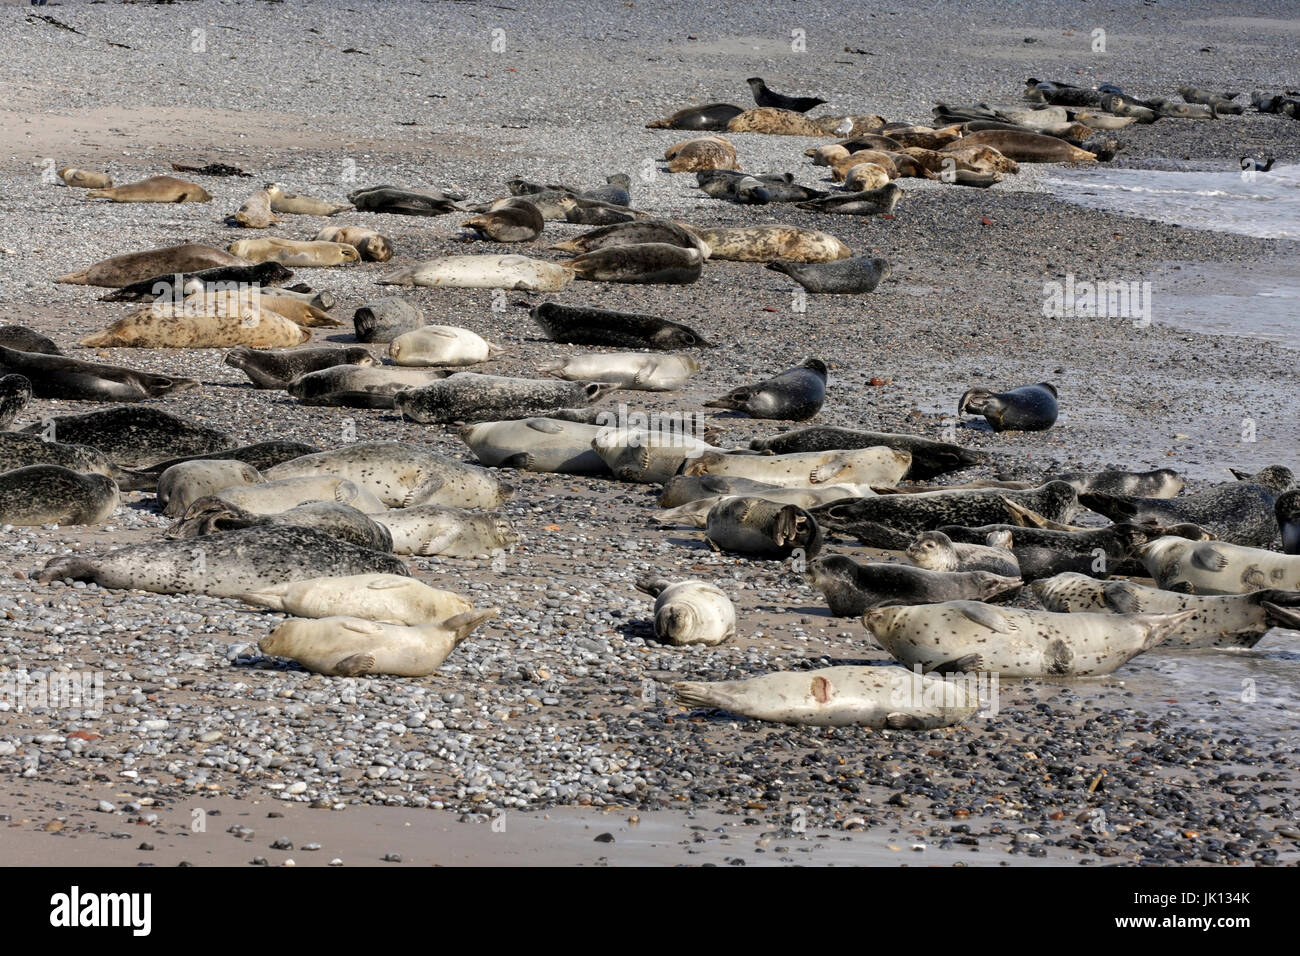 To seal phoca vitulina rest on the beach, Seehunde (phoca vitulina) ruhen am Strand Stock Photo